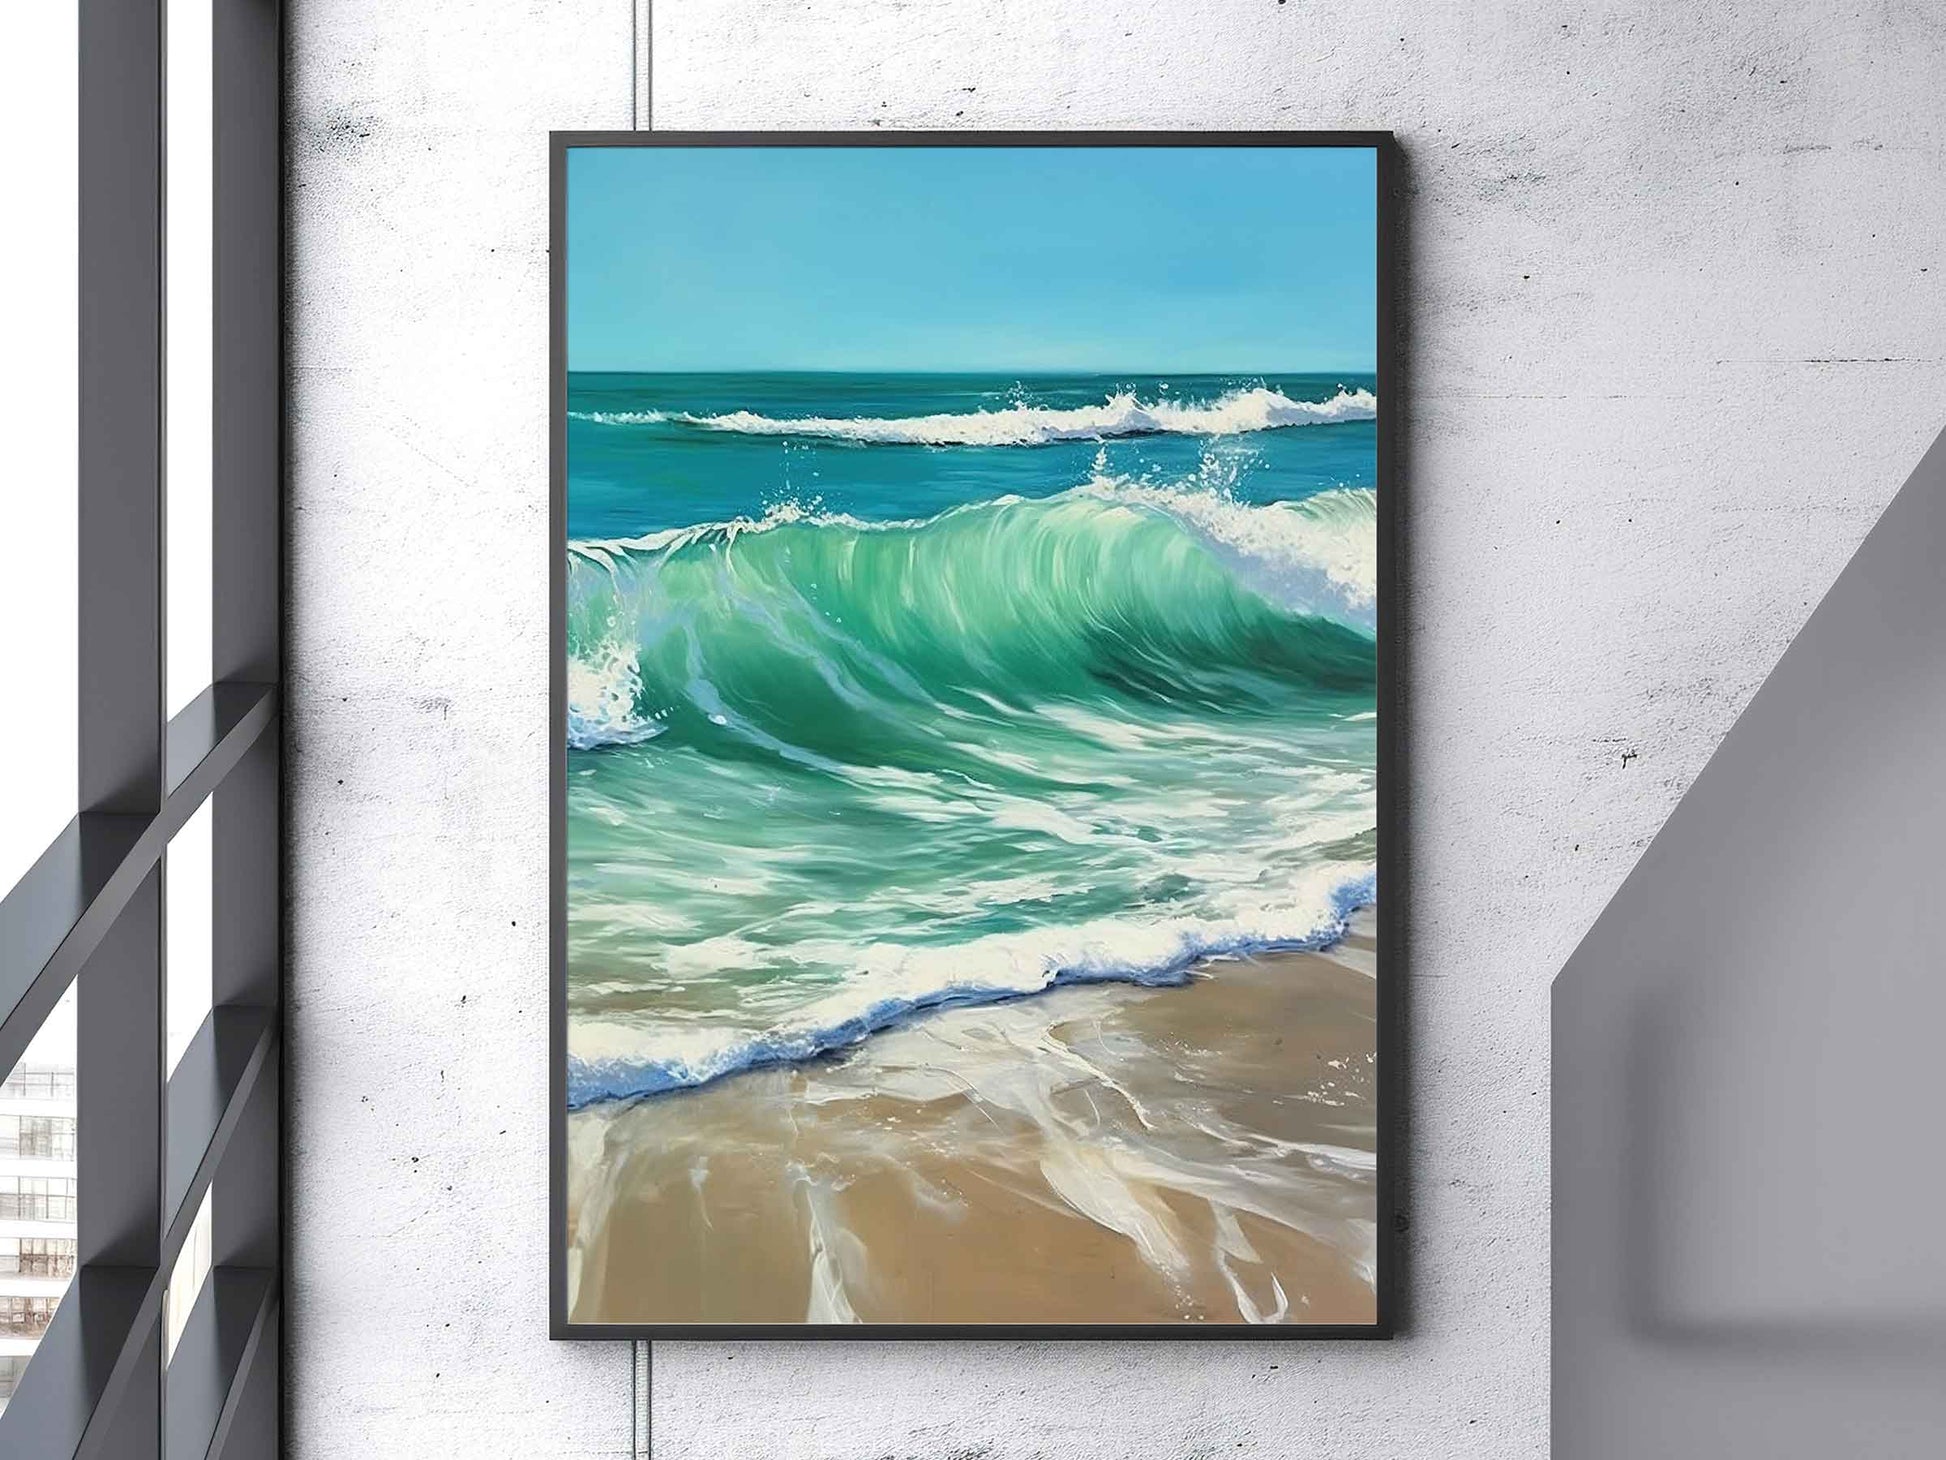 Framed Image of Boho Surf Beach and Nature Ocean Coastal Abstract Wall Art Prints